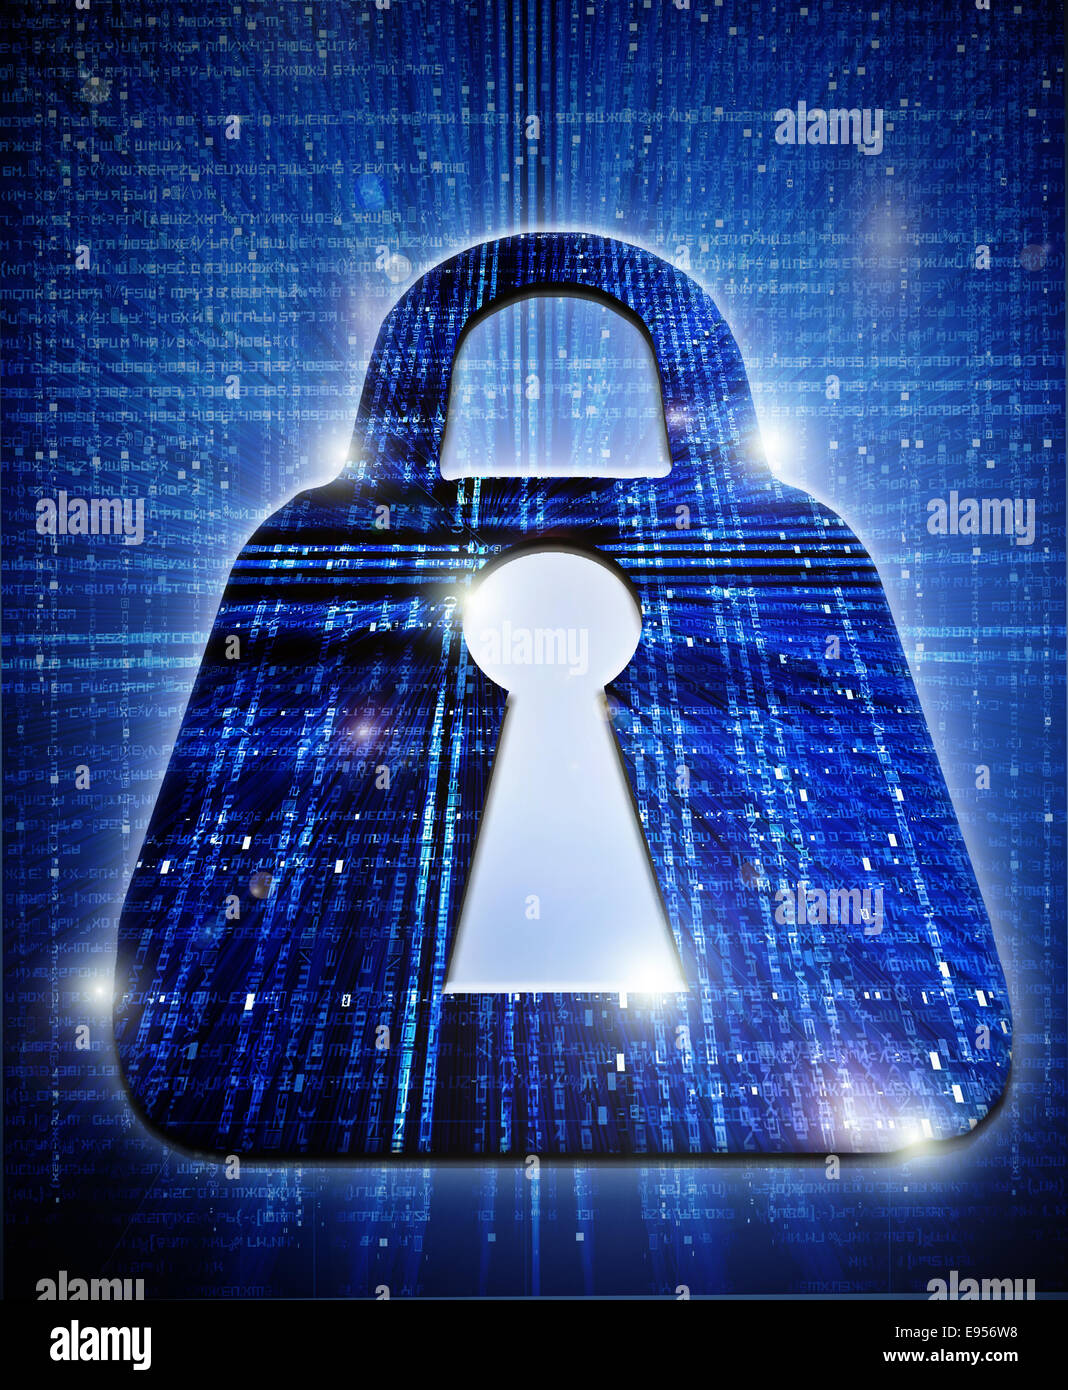 padlock digital security concept illustration Stock Photo